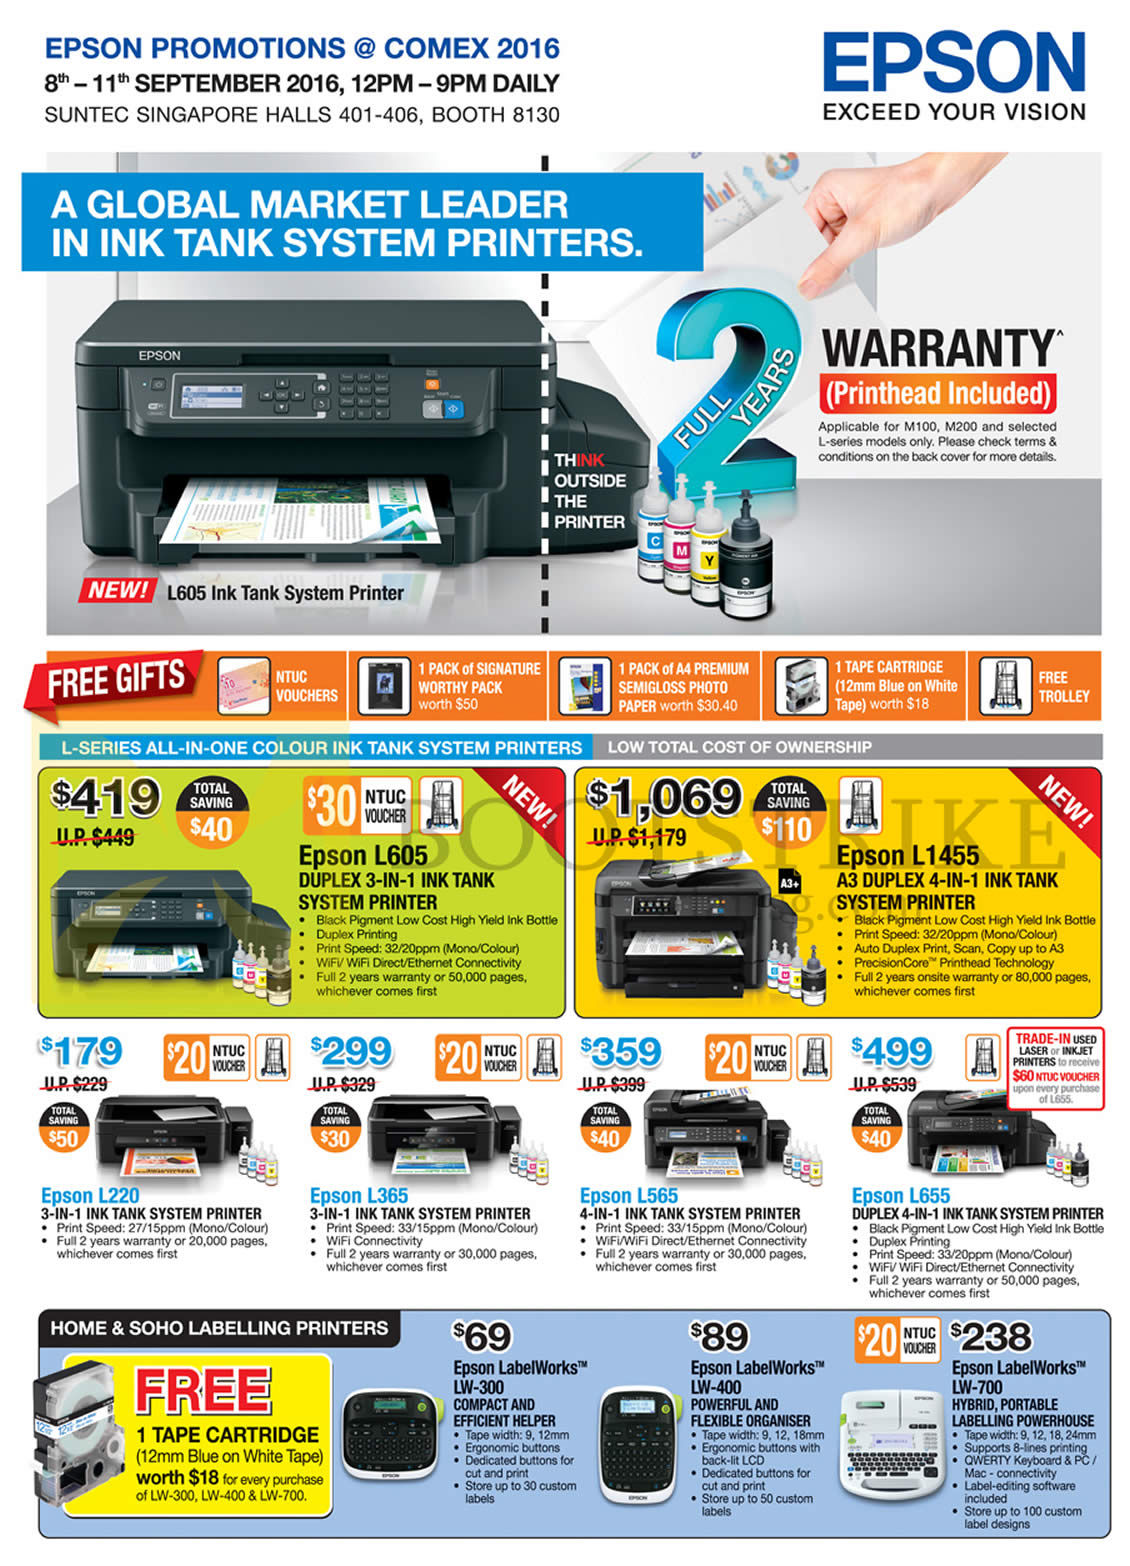 COMEX 2016 price list image brochure of Epson Printers, Labellers, L605, L1455, L220, L365, L565, L655, LW-300, LW-400, LW-700